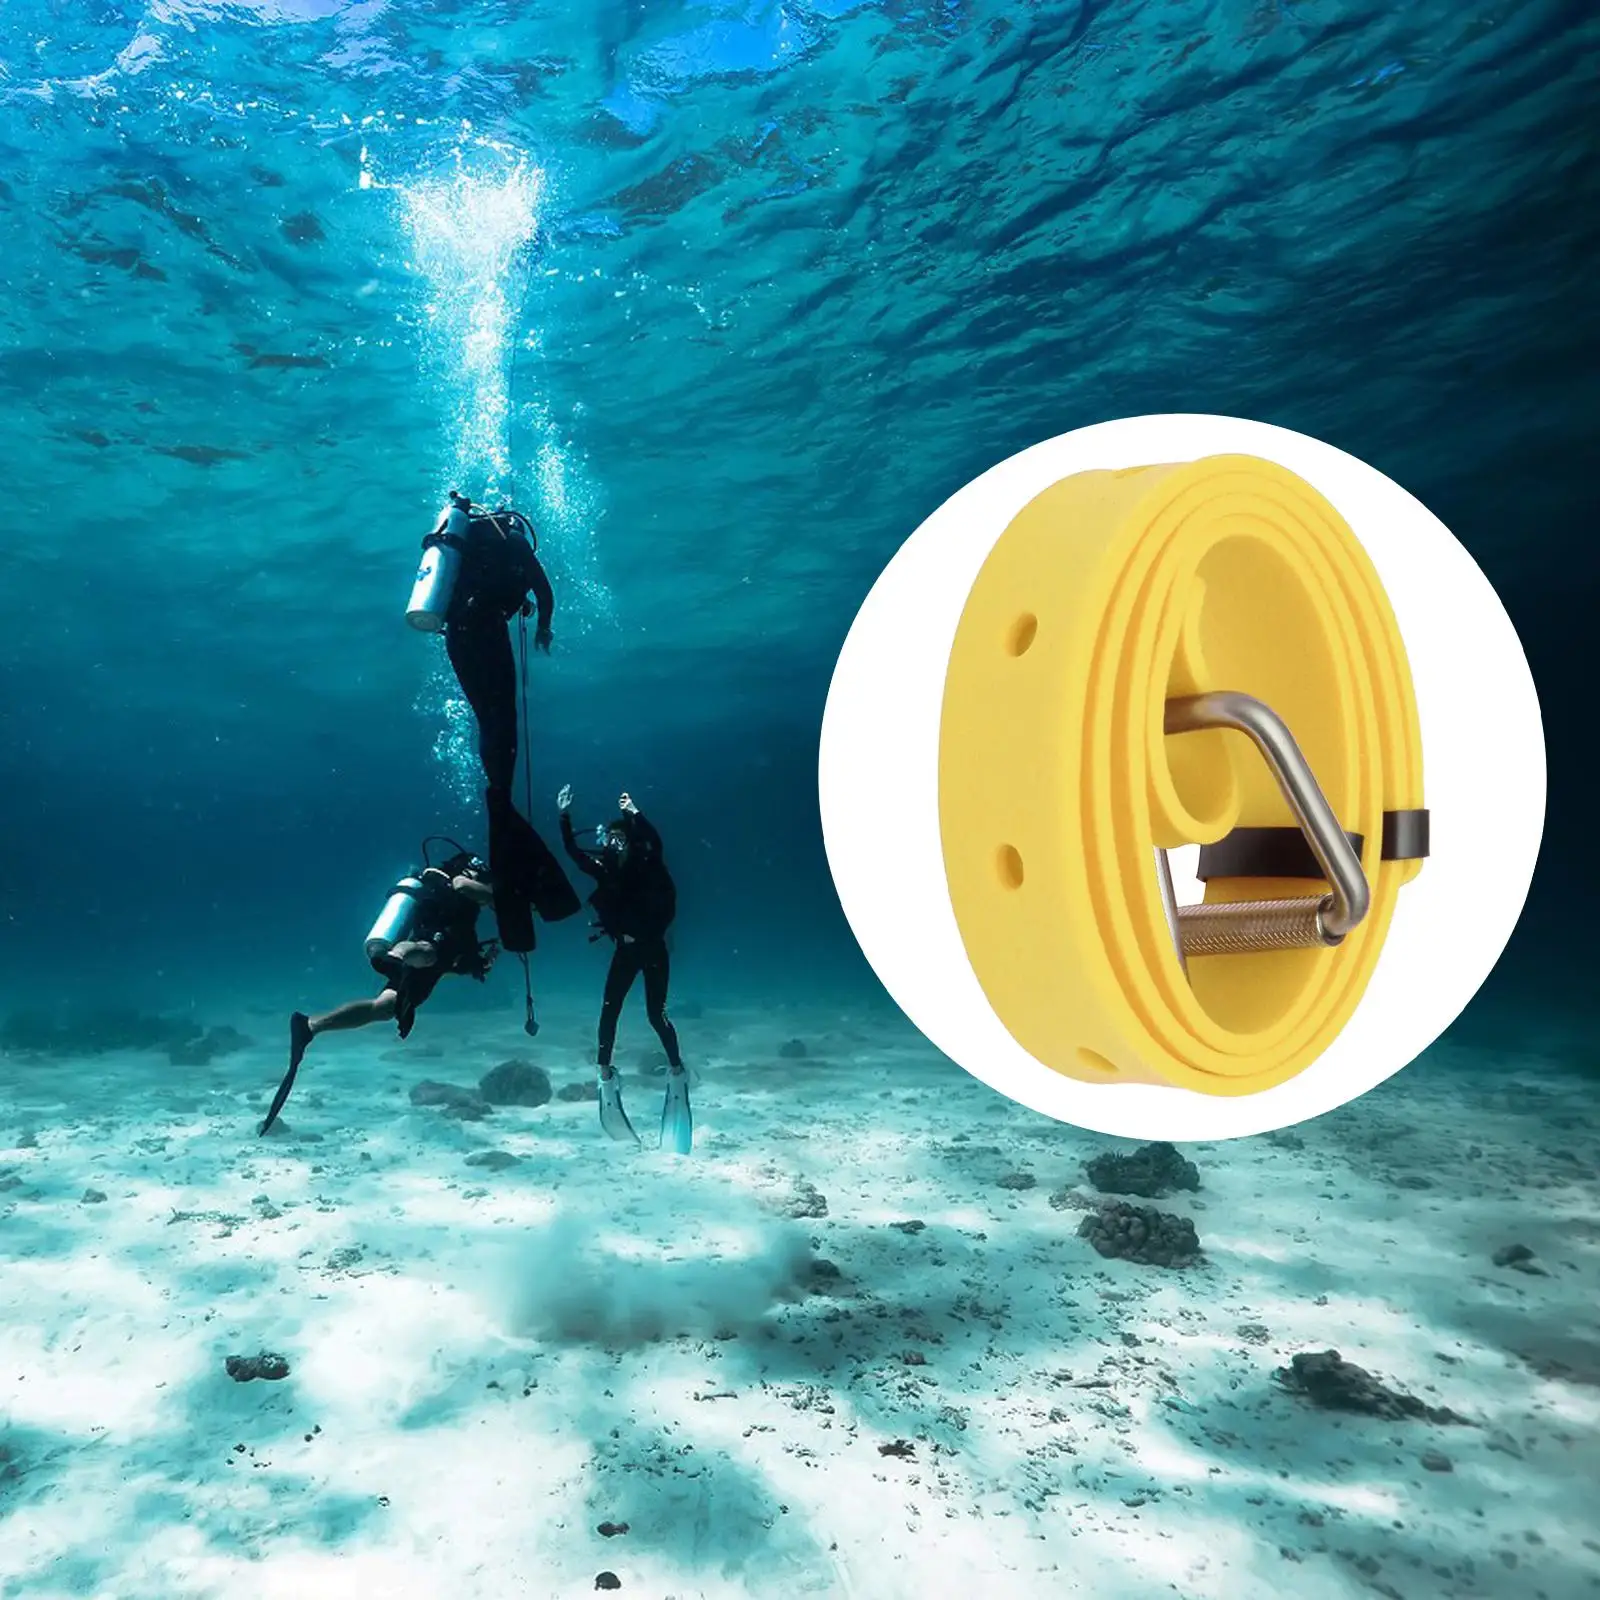 1.3M Diving Weight Belt Diving Weight Webbing with Buckle Belt Equipment for Outdoor Water Sport Snorkeling Scuba Diving